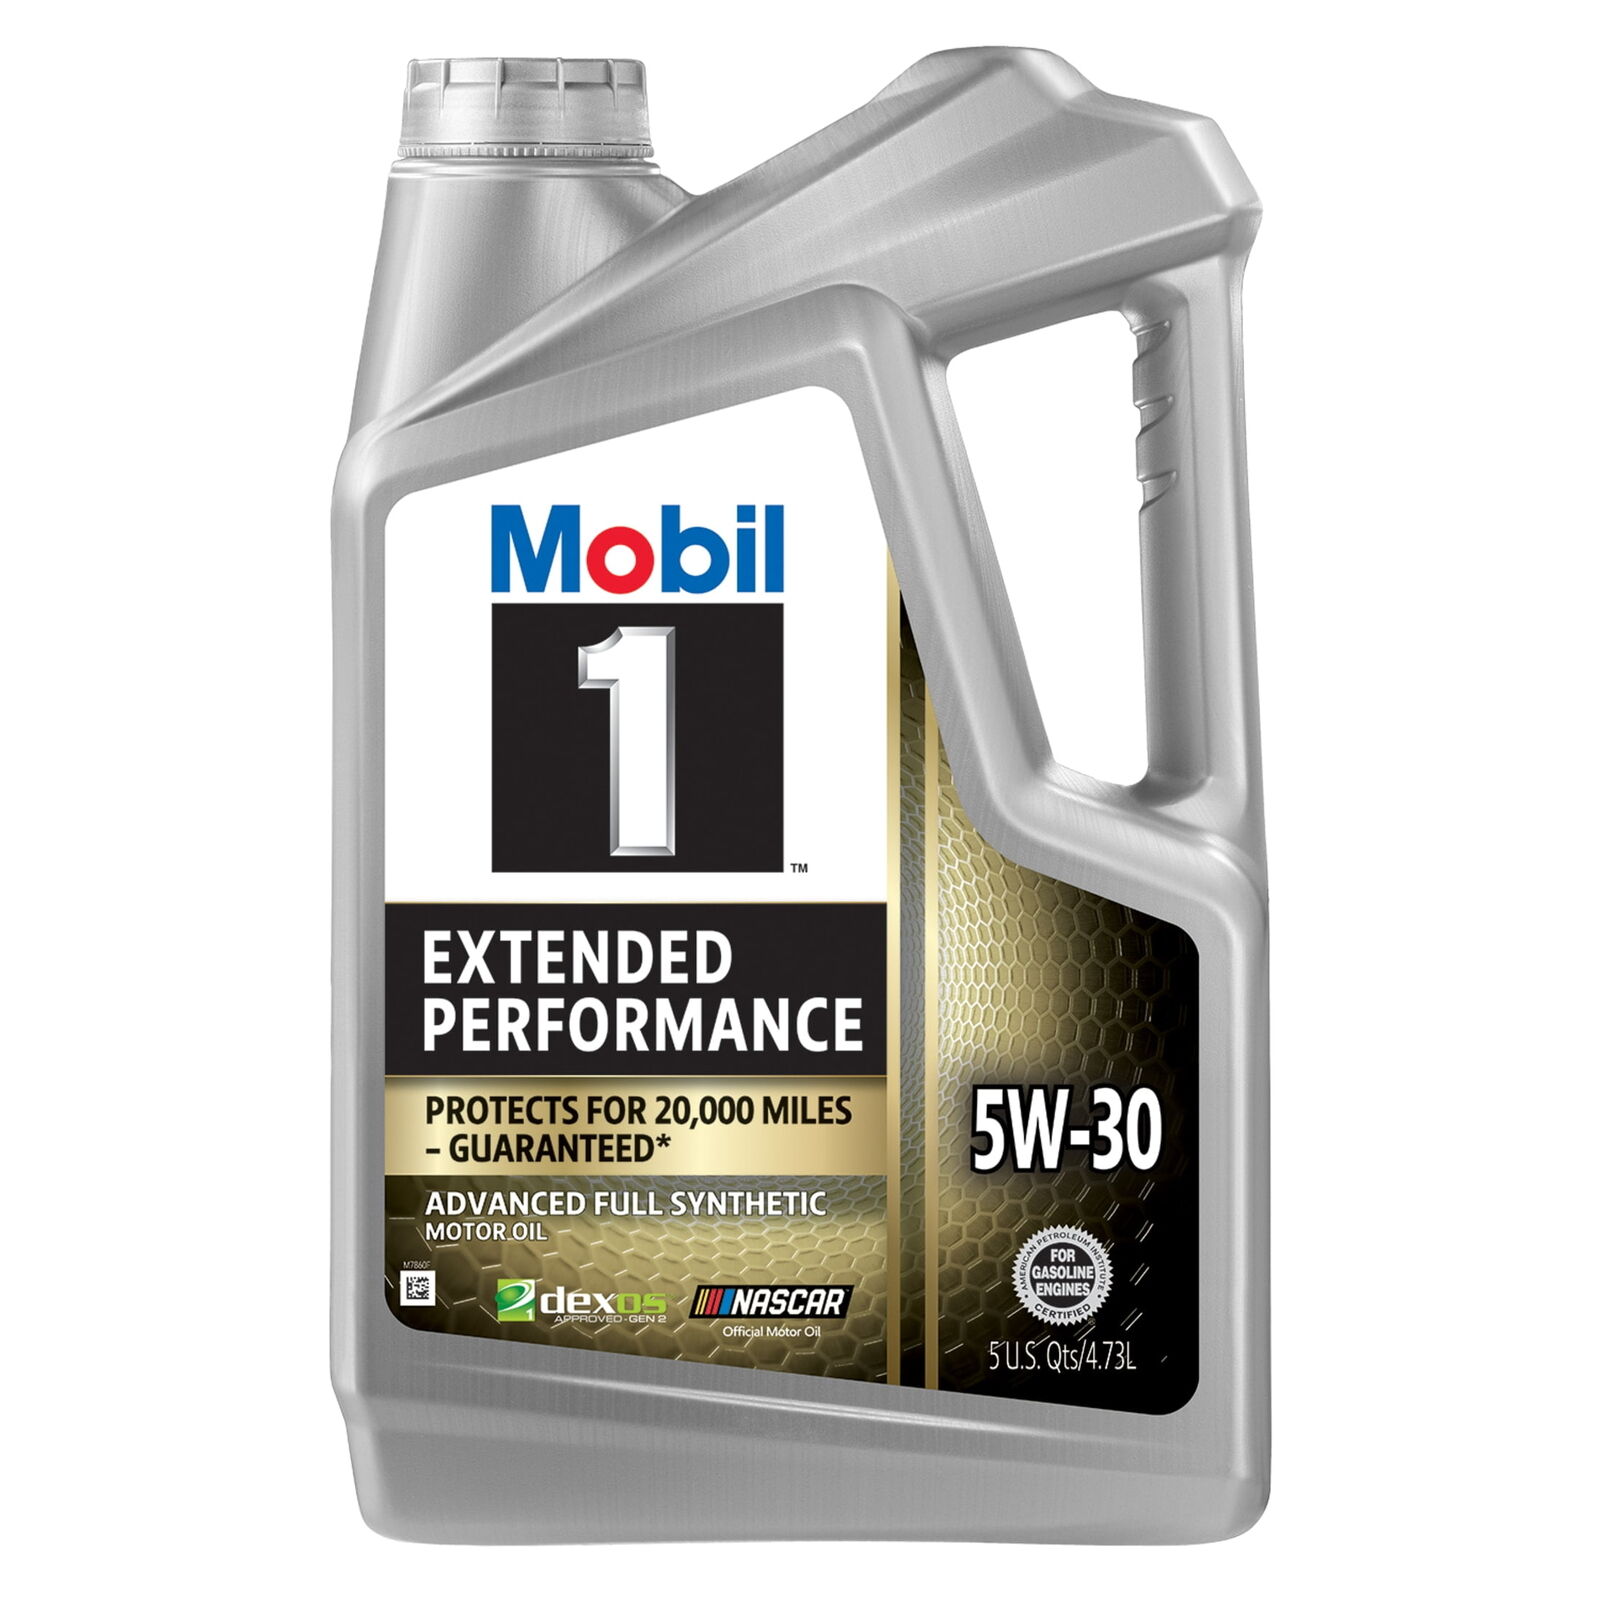  Extended Performance Full Synthetic Motor Oil 5W-30, 5 Quart (Pack of 9)